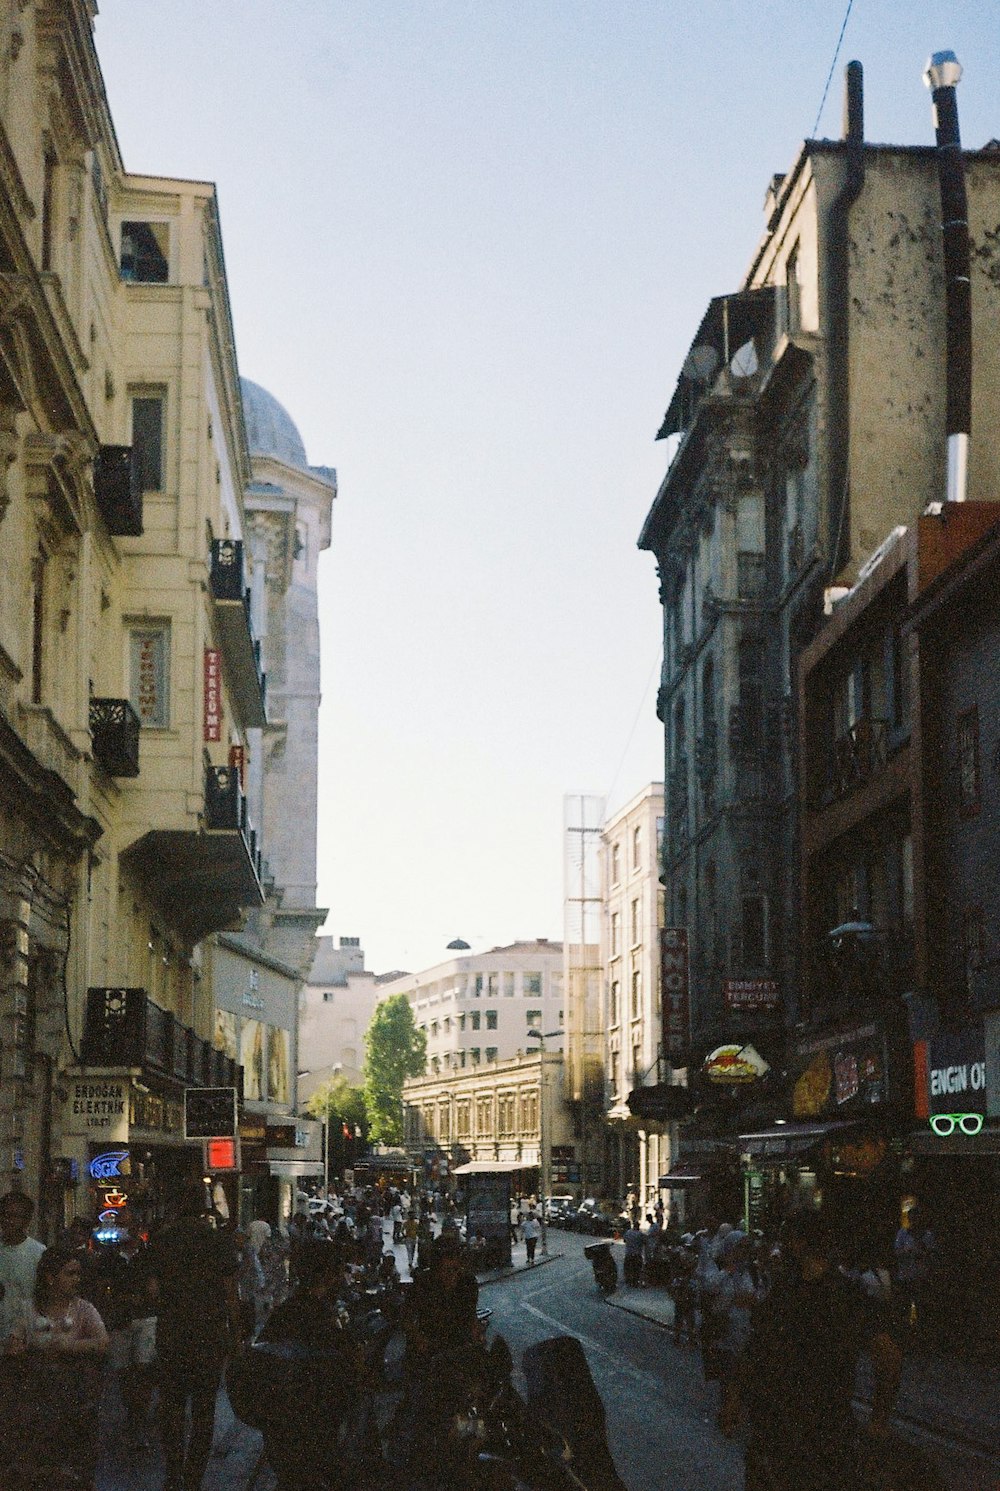 a busy city street